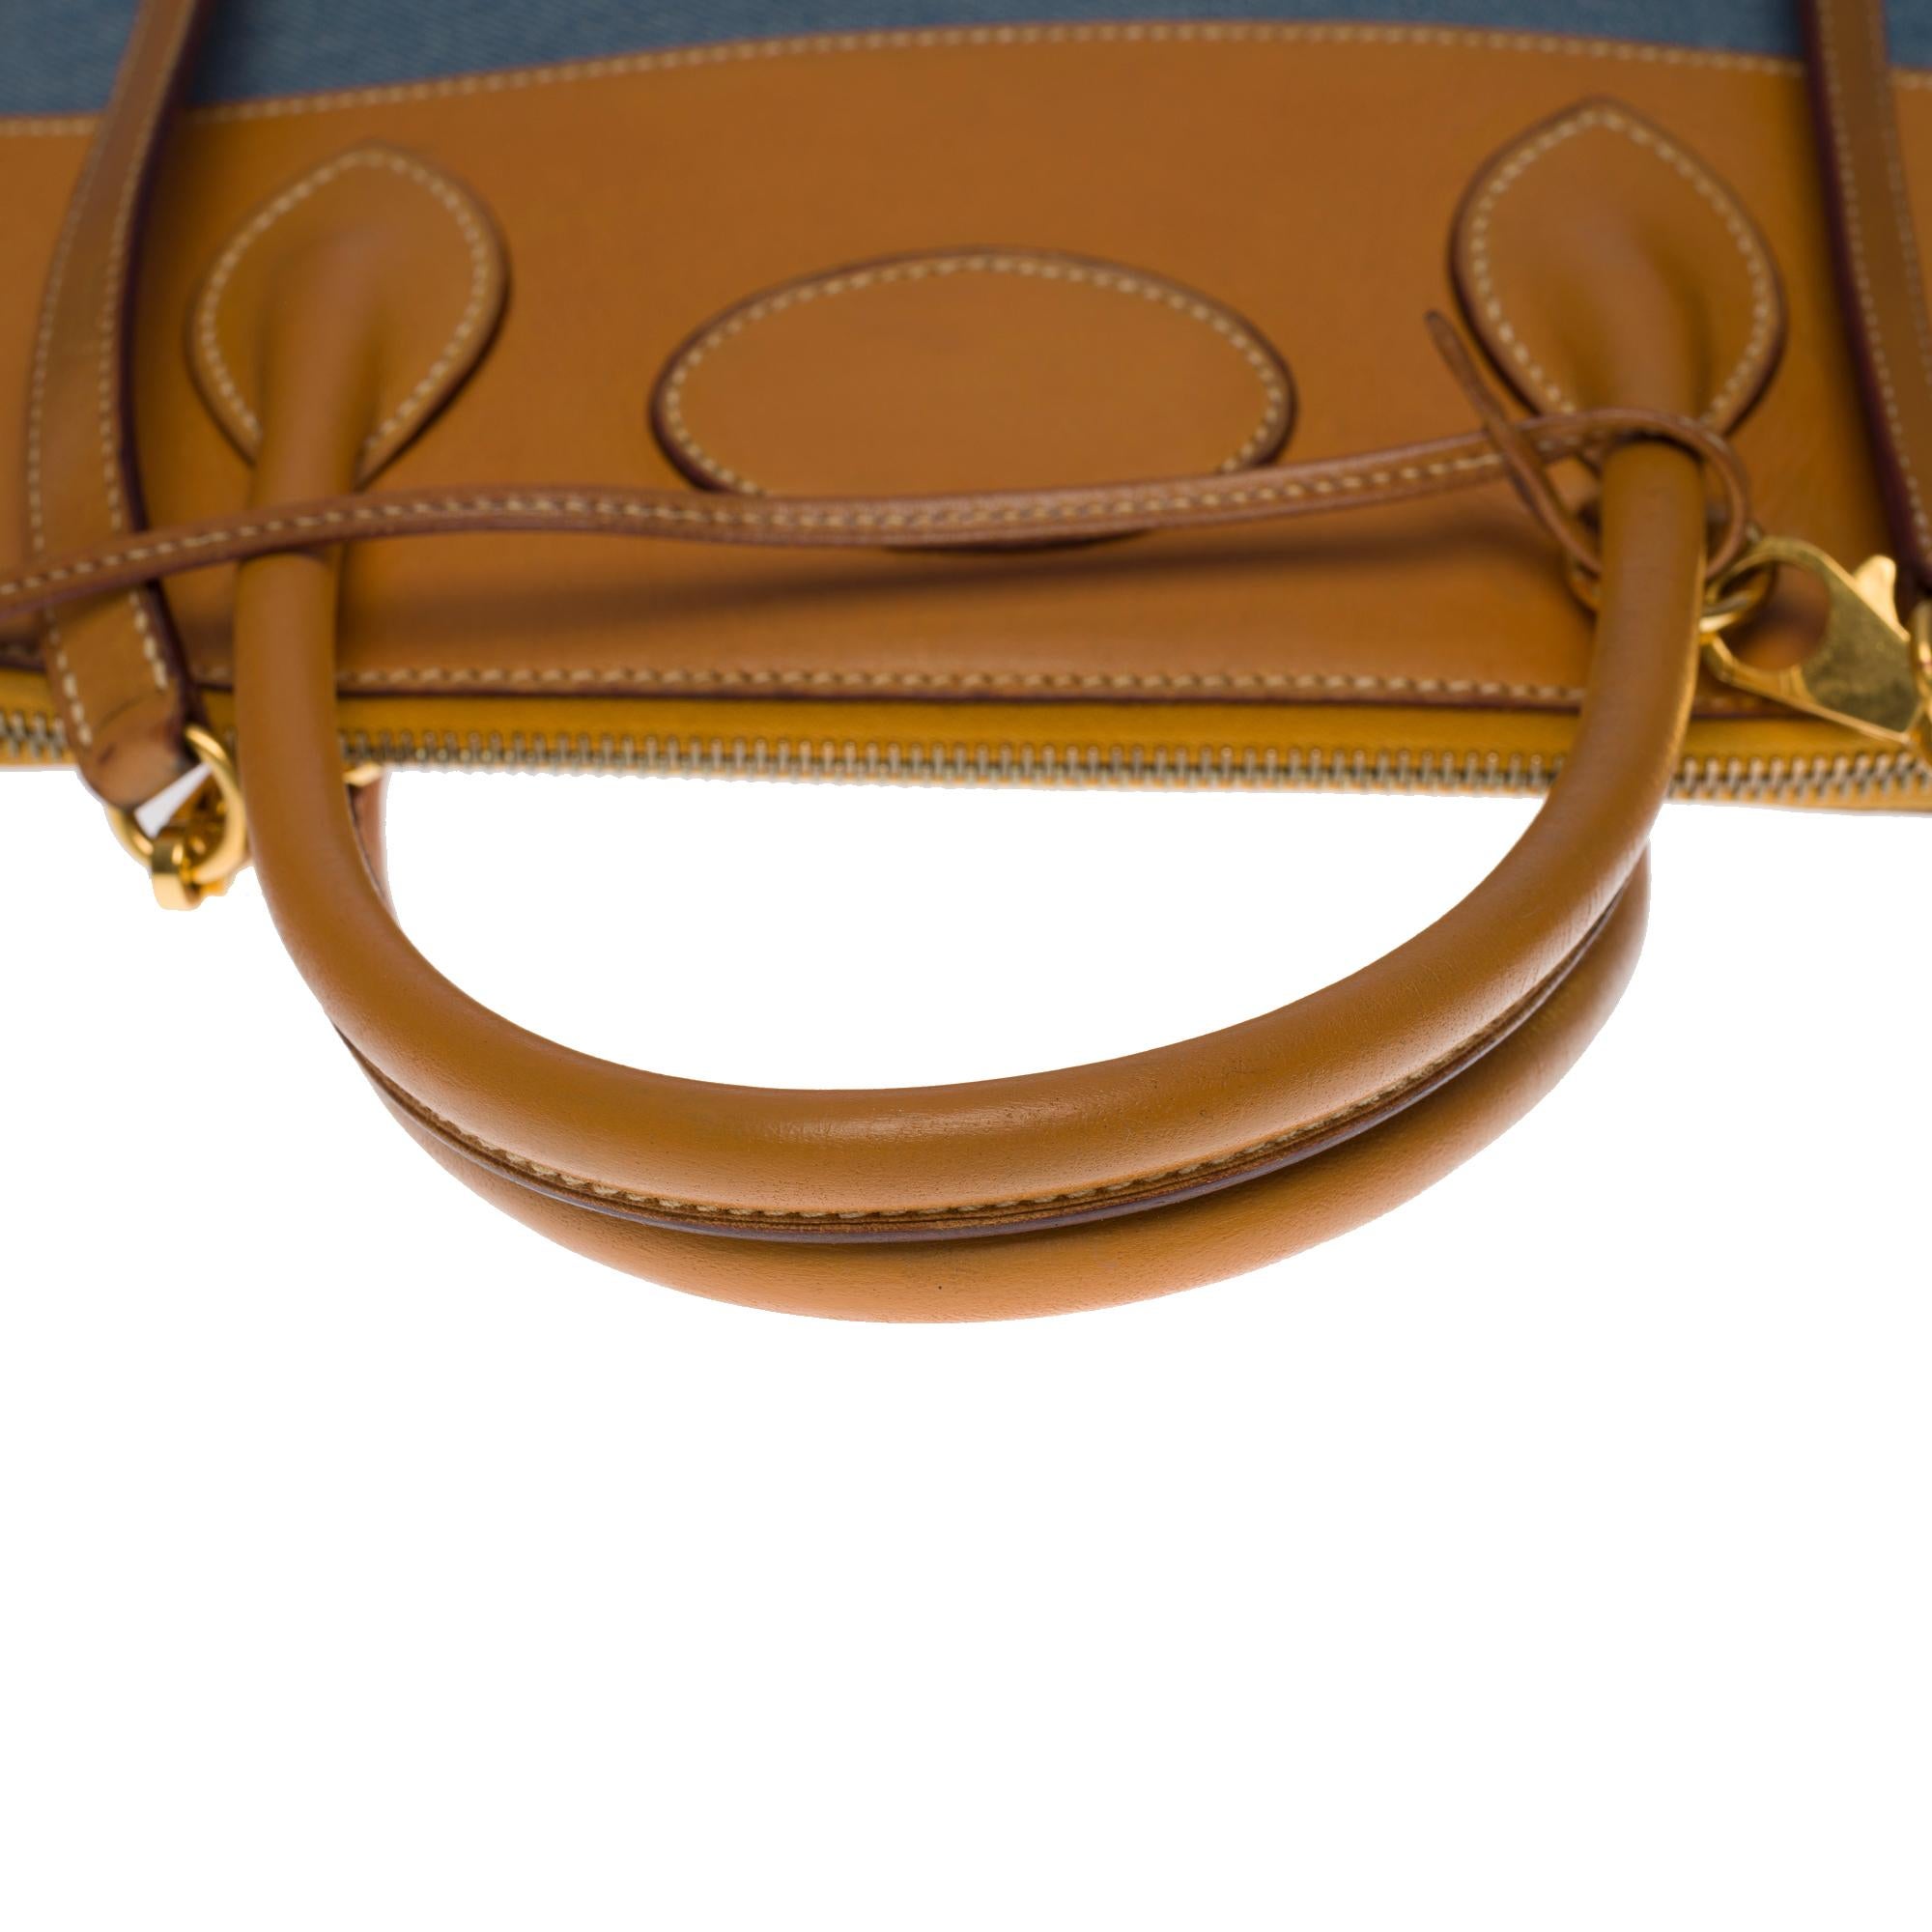 Rare Hermes Bolide handbag strap in Barenia leather and Blue denim, GHW 3